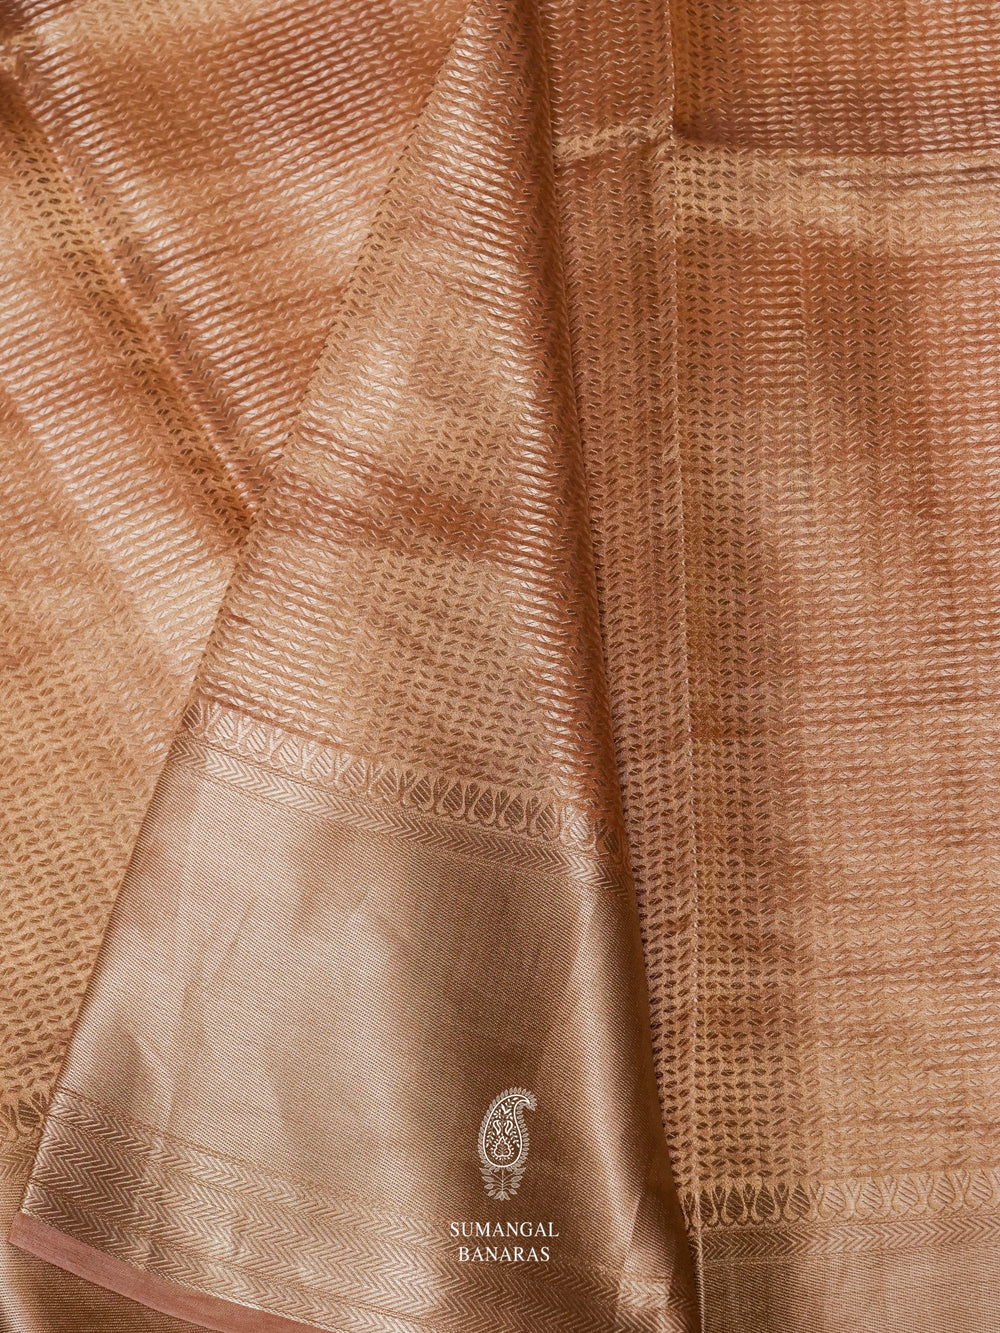 Handwoven Banarasi Tissue Saree